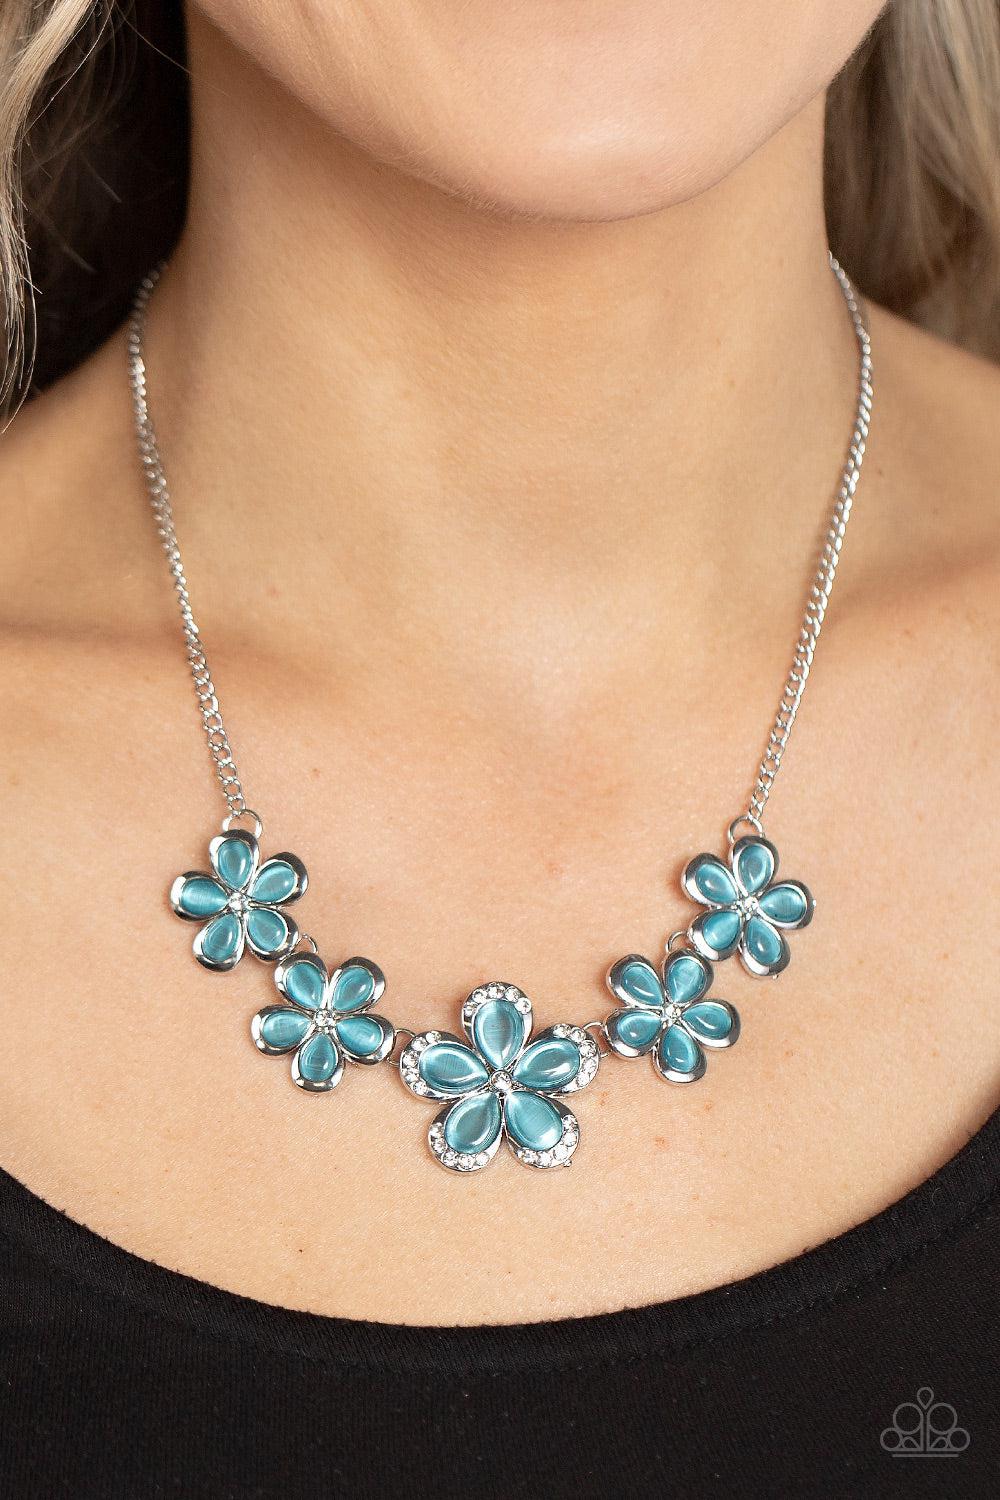 Garden Daydream Blue Cat's Eye Stone Necklace - Paparazzi Accessories- lightbox - CarasShop.com - $5 Jewelry by Cara Jewels